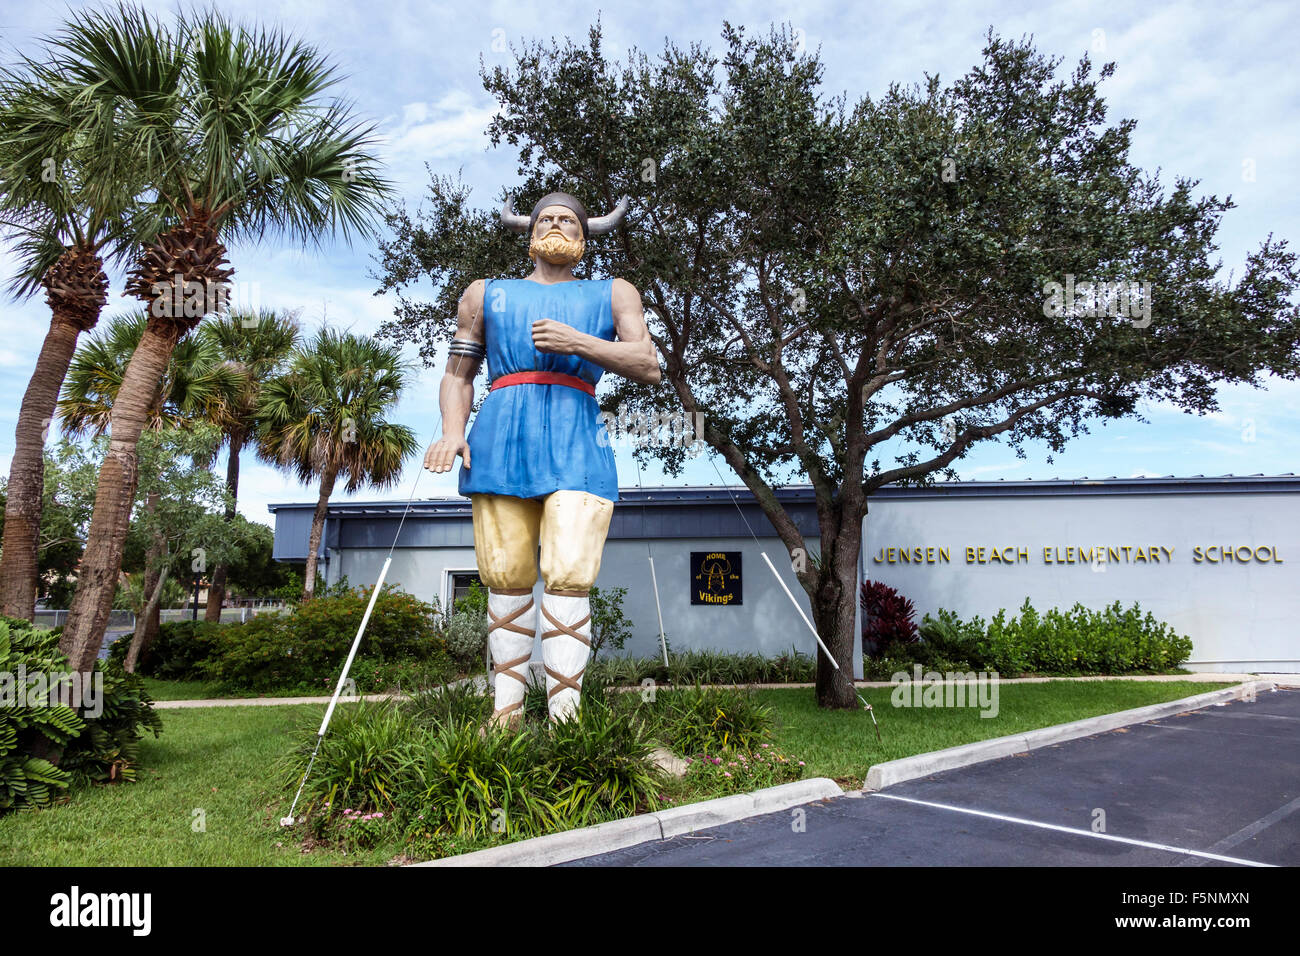 Jensen Beach Florida,Elementary School,giant Viking,Jenguard mascot,fiberglass statue,FL150815041 Stock Photo